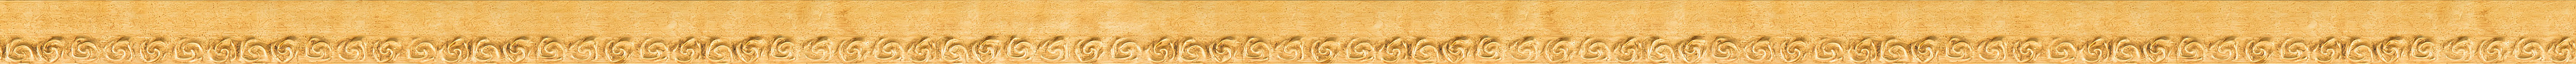 Contemporary gold leaf frame frame